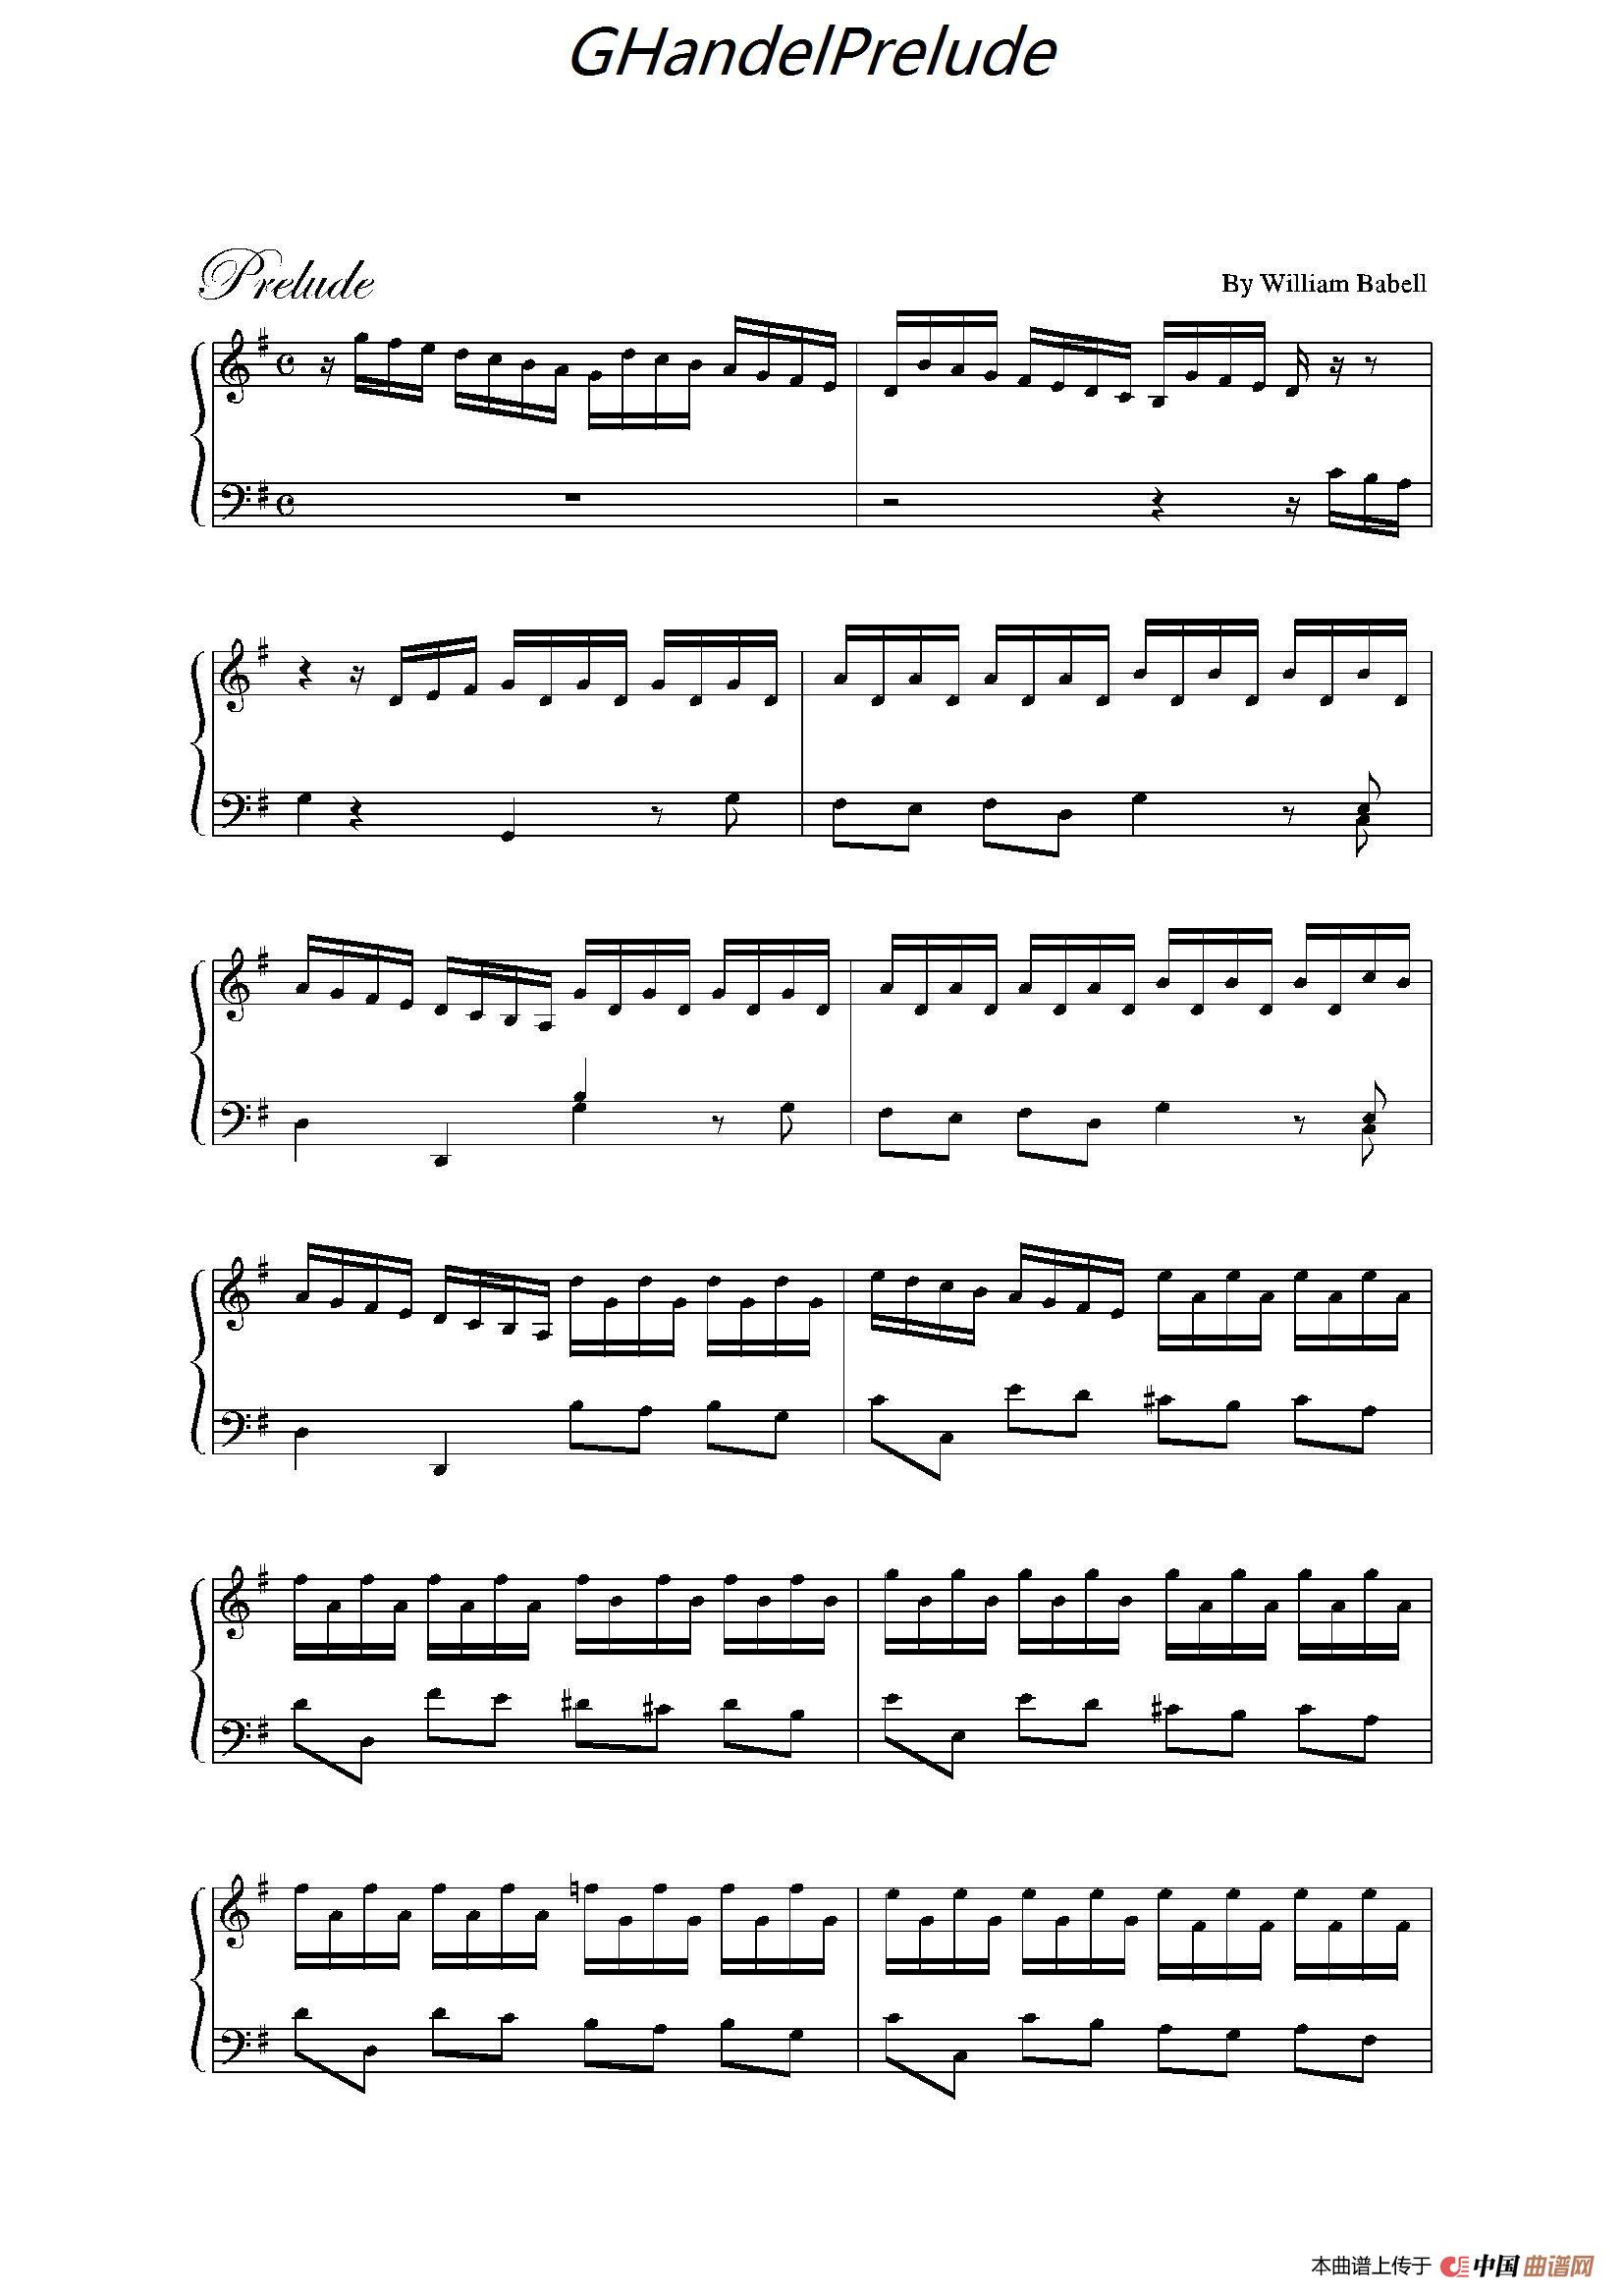 《GHandelPrelude》钢琴曲谱图分享